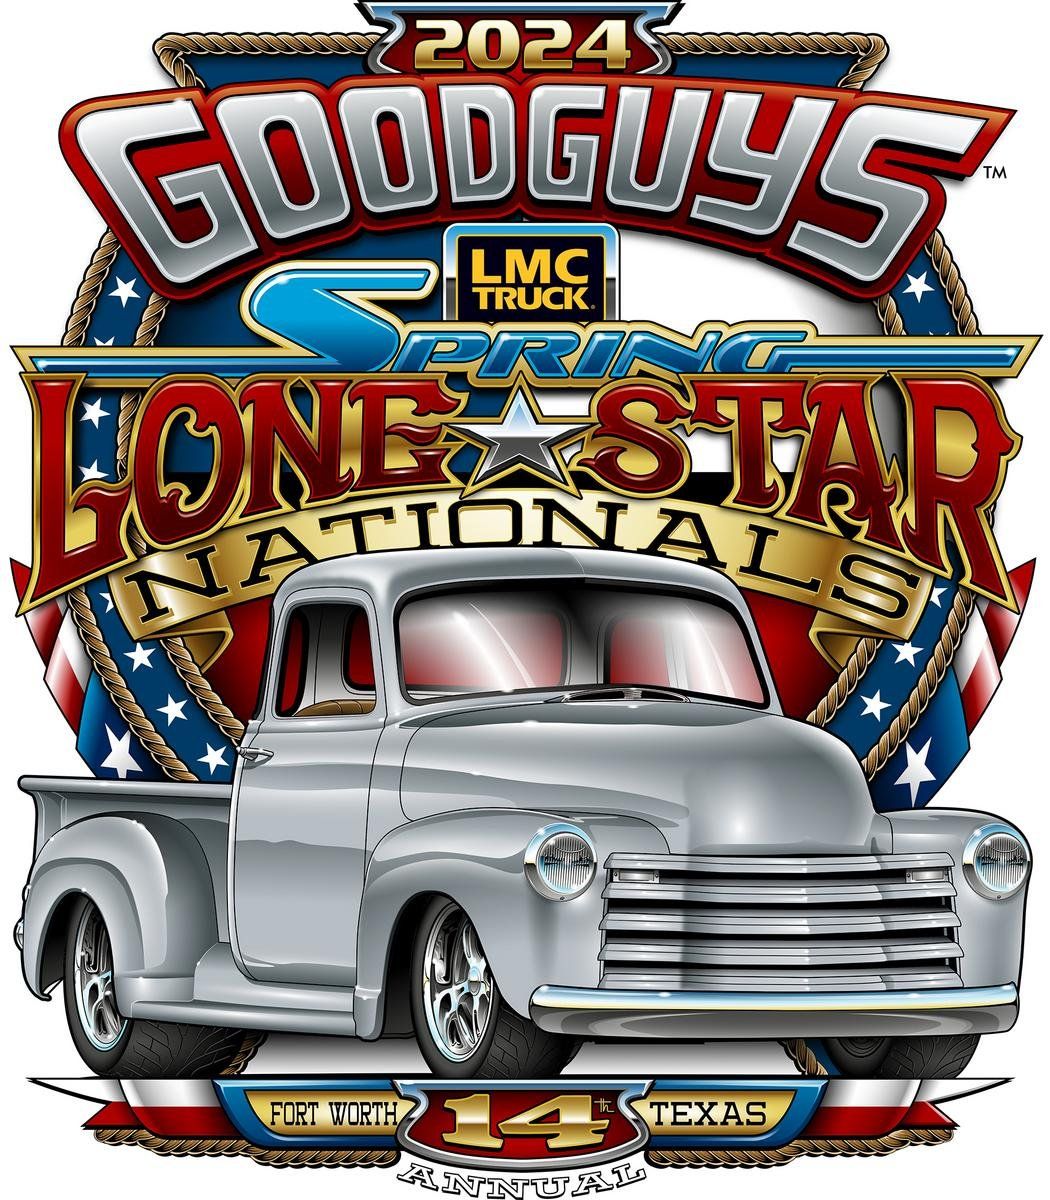 Goodguys Car Show - 14th LMC Truck Spring Lone Star Nationals